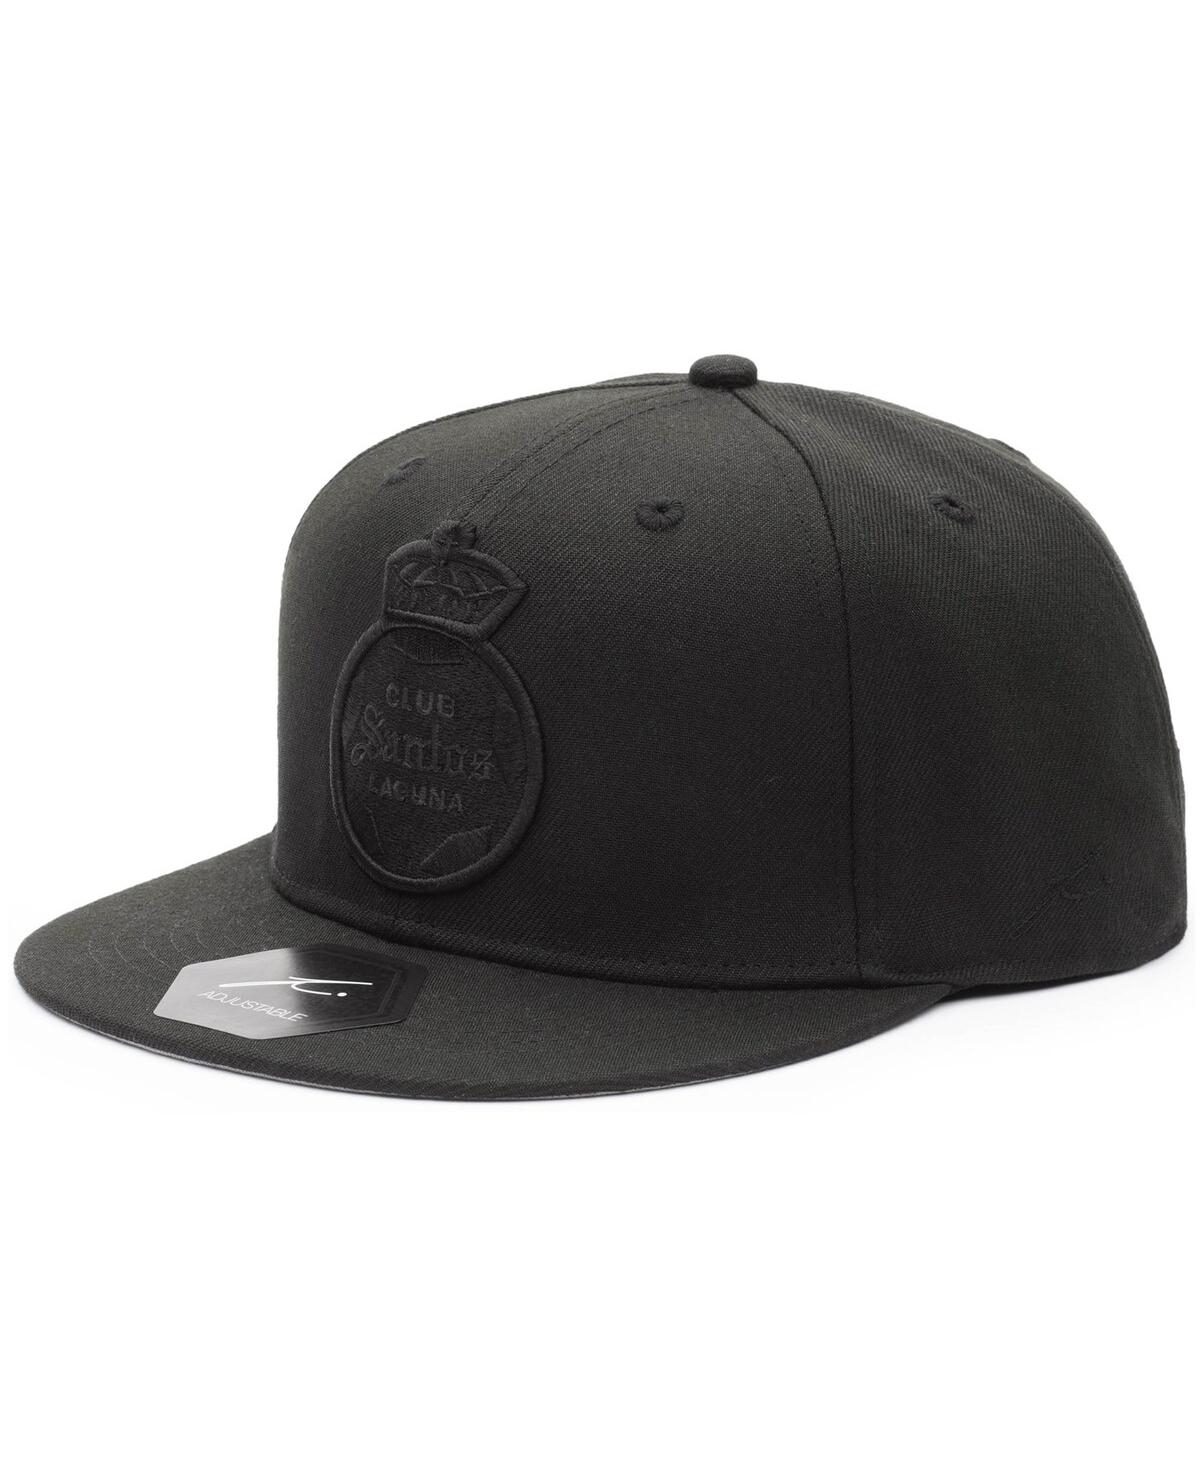 Men's Fi Collection Black Santos Laguna Dusk Snapback Adjustable Hat - Black